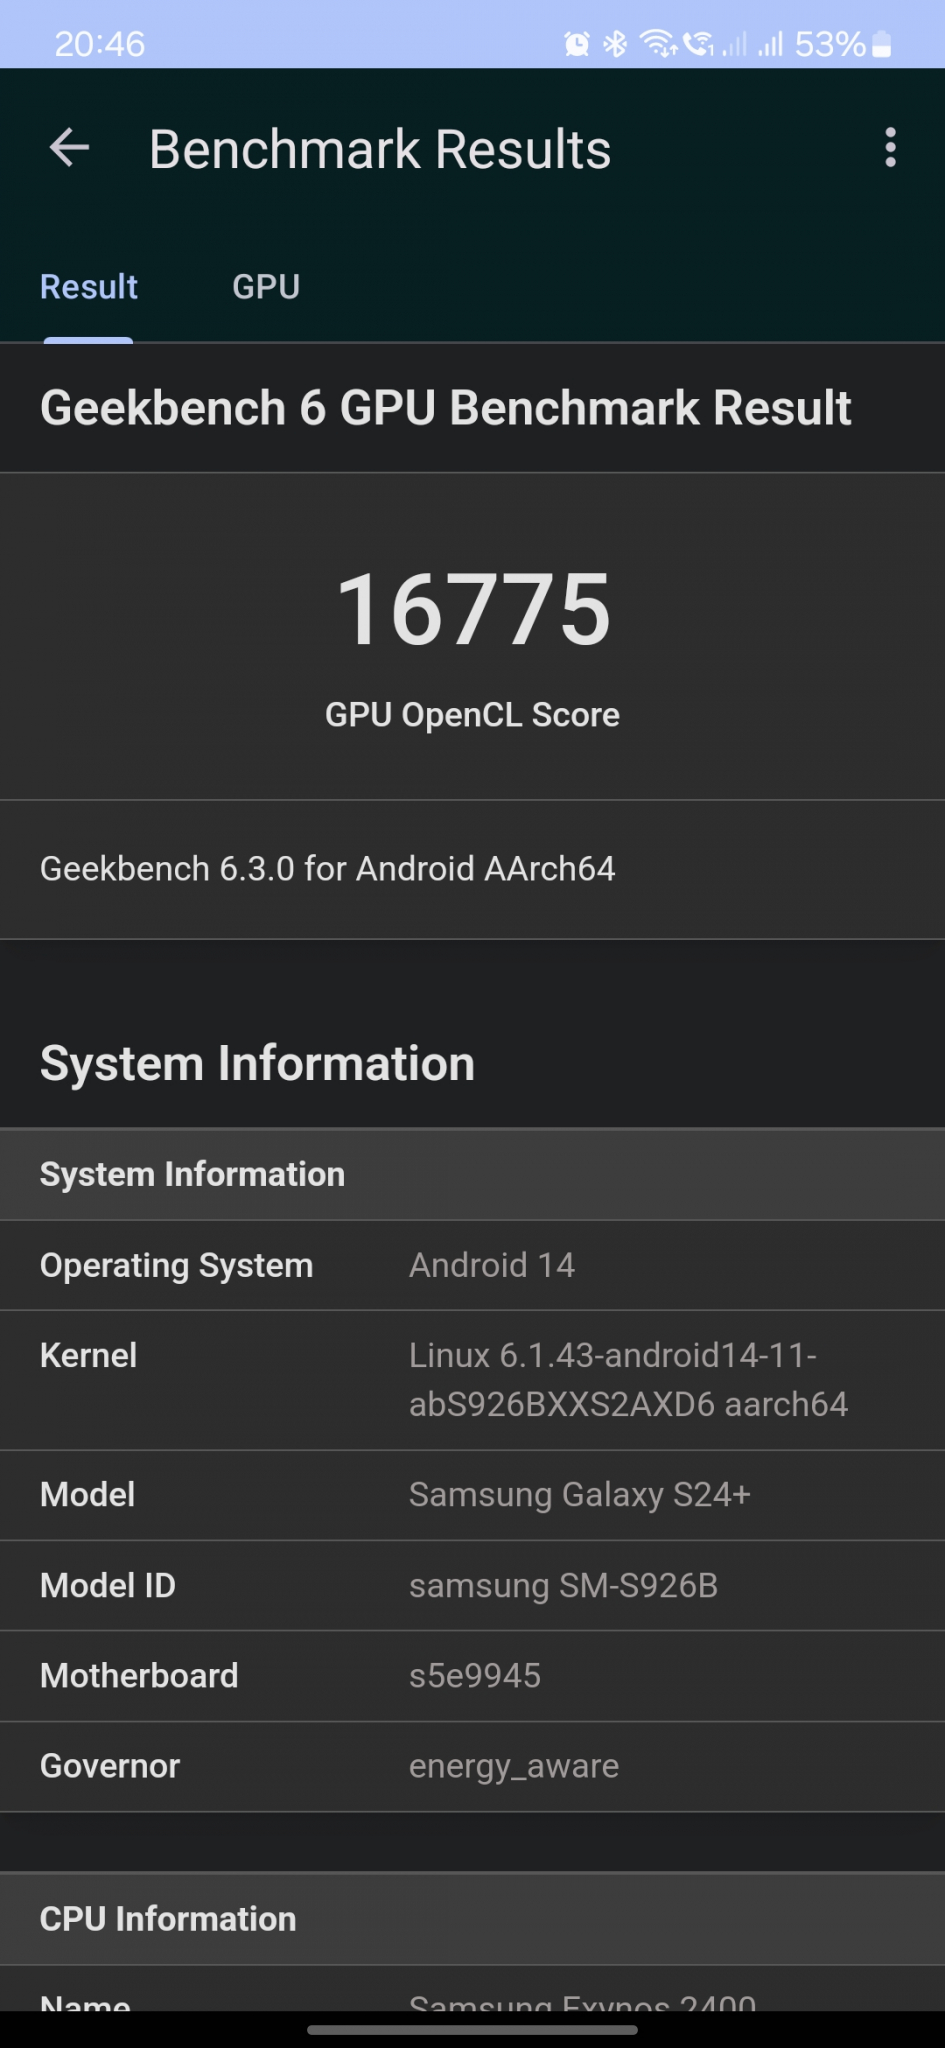 Samsung S24+ Geekbench 6 GPU OpenCL Score